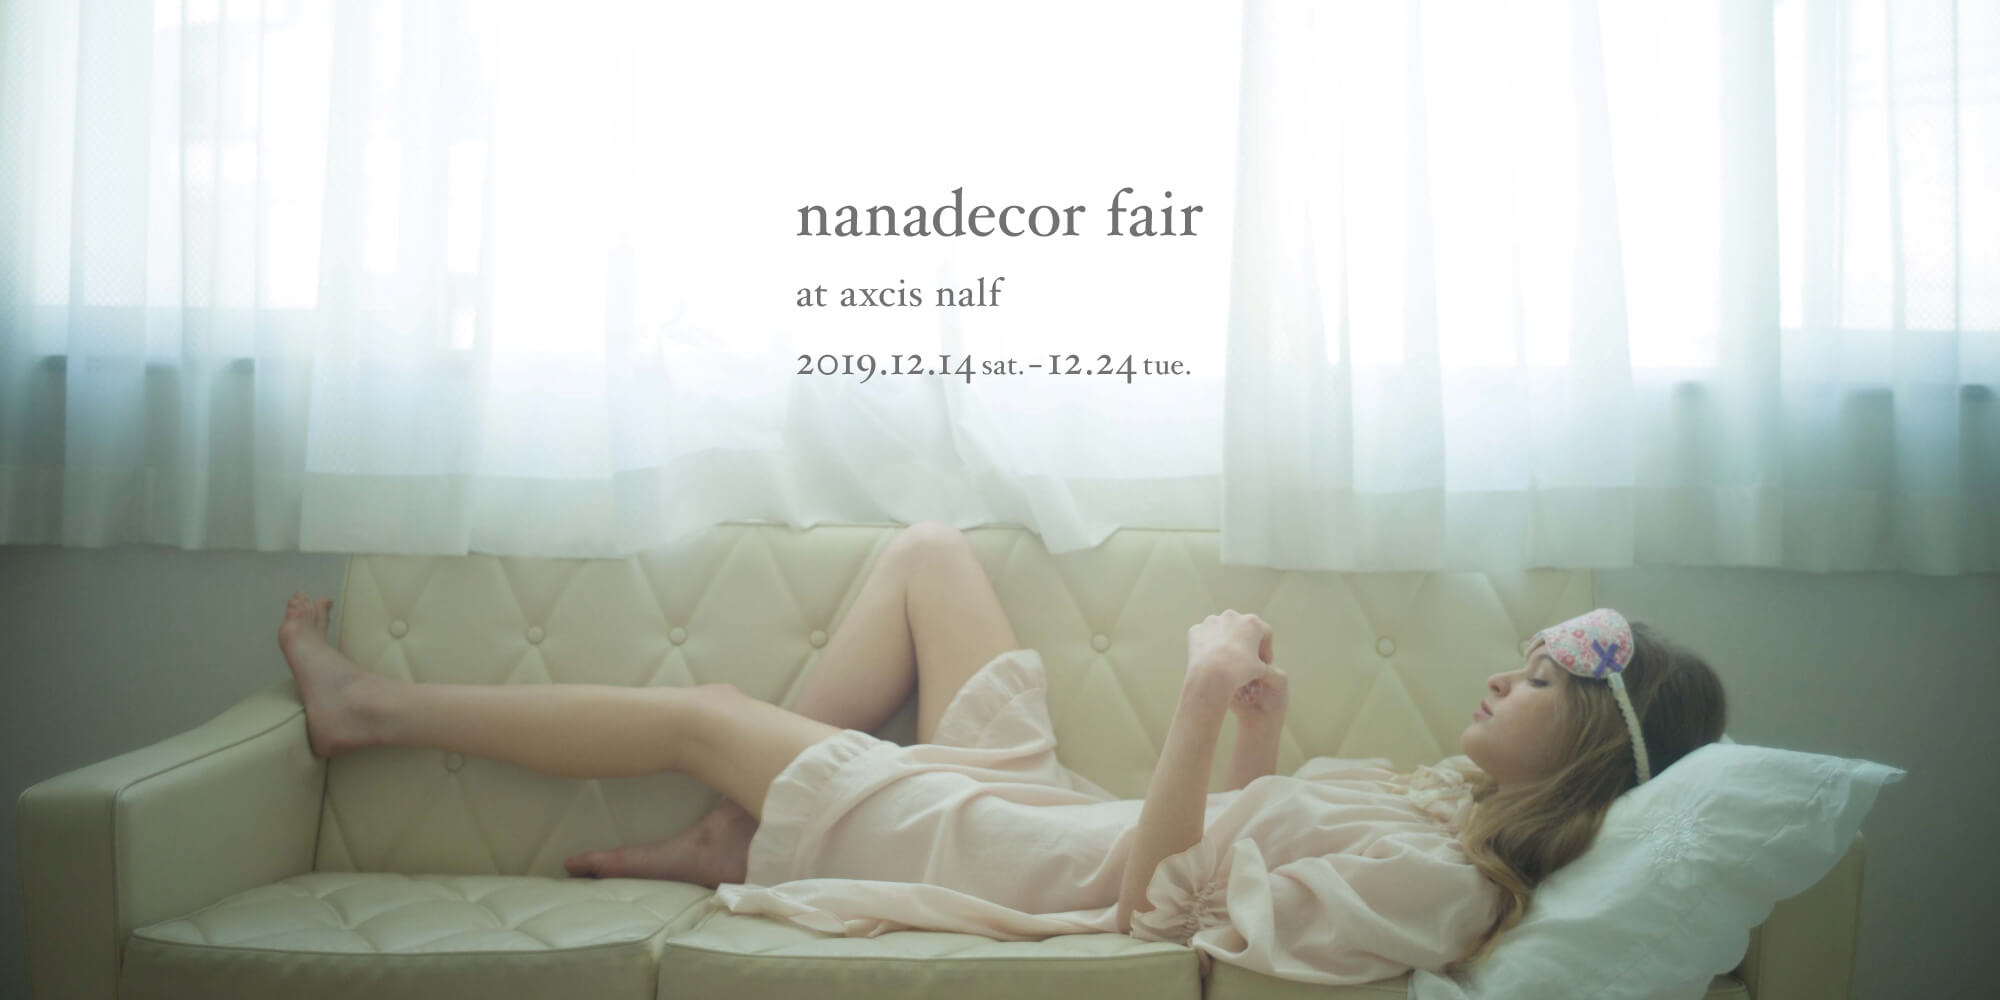 nanadecor fairのイベント情報を掲載しました。